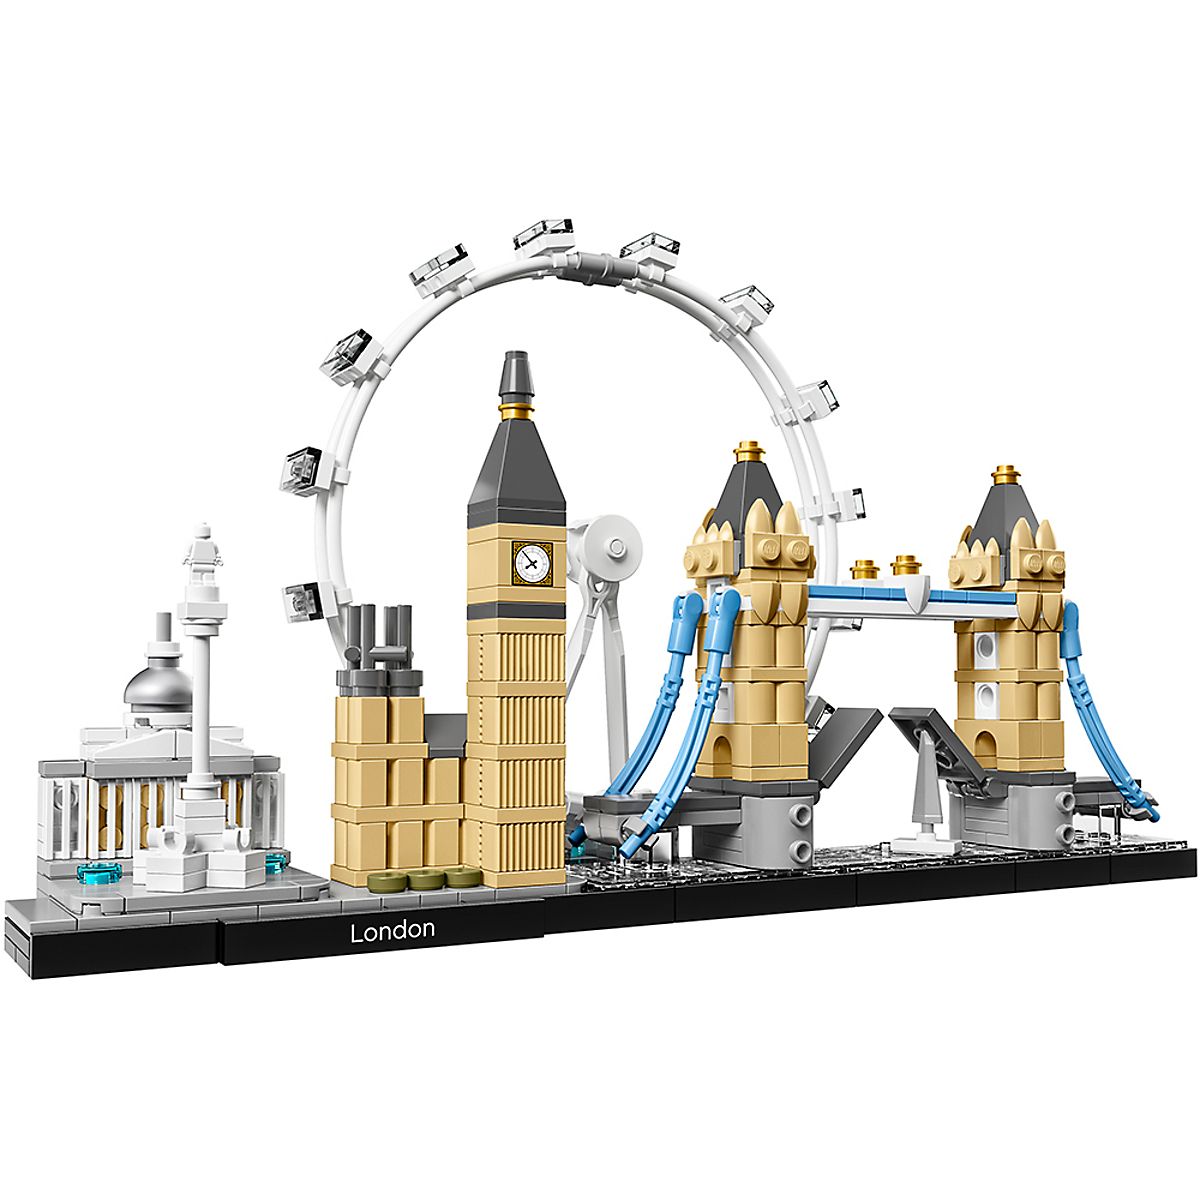 LEGO Architecture Londres 21034